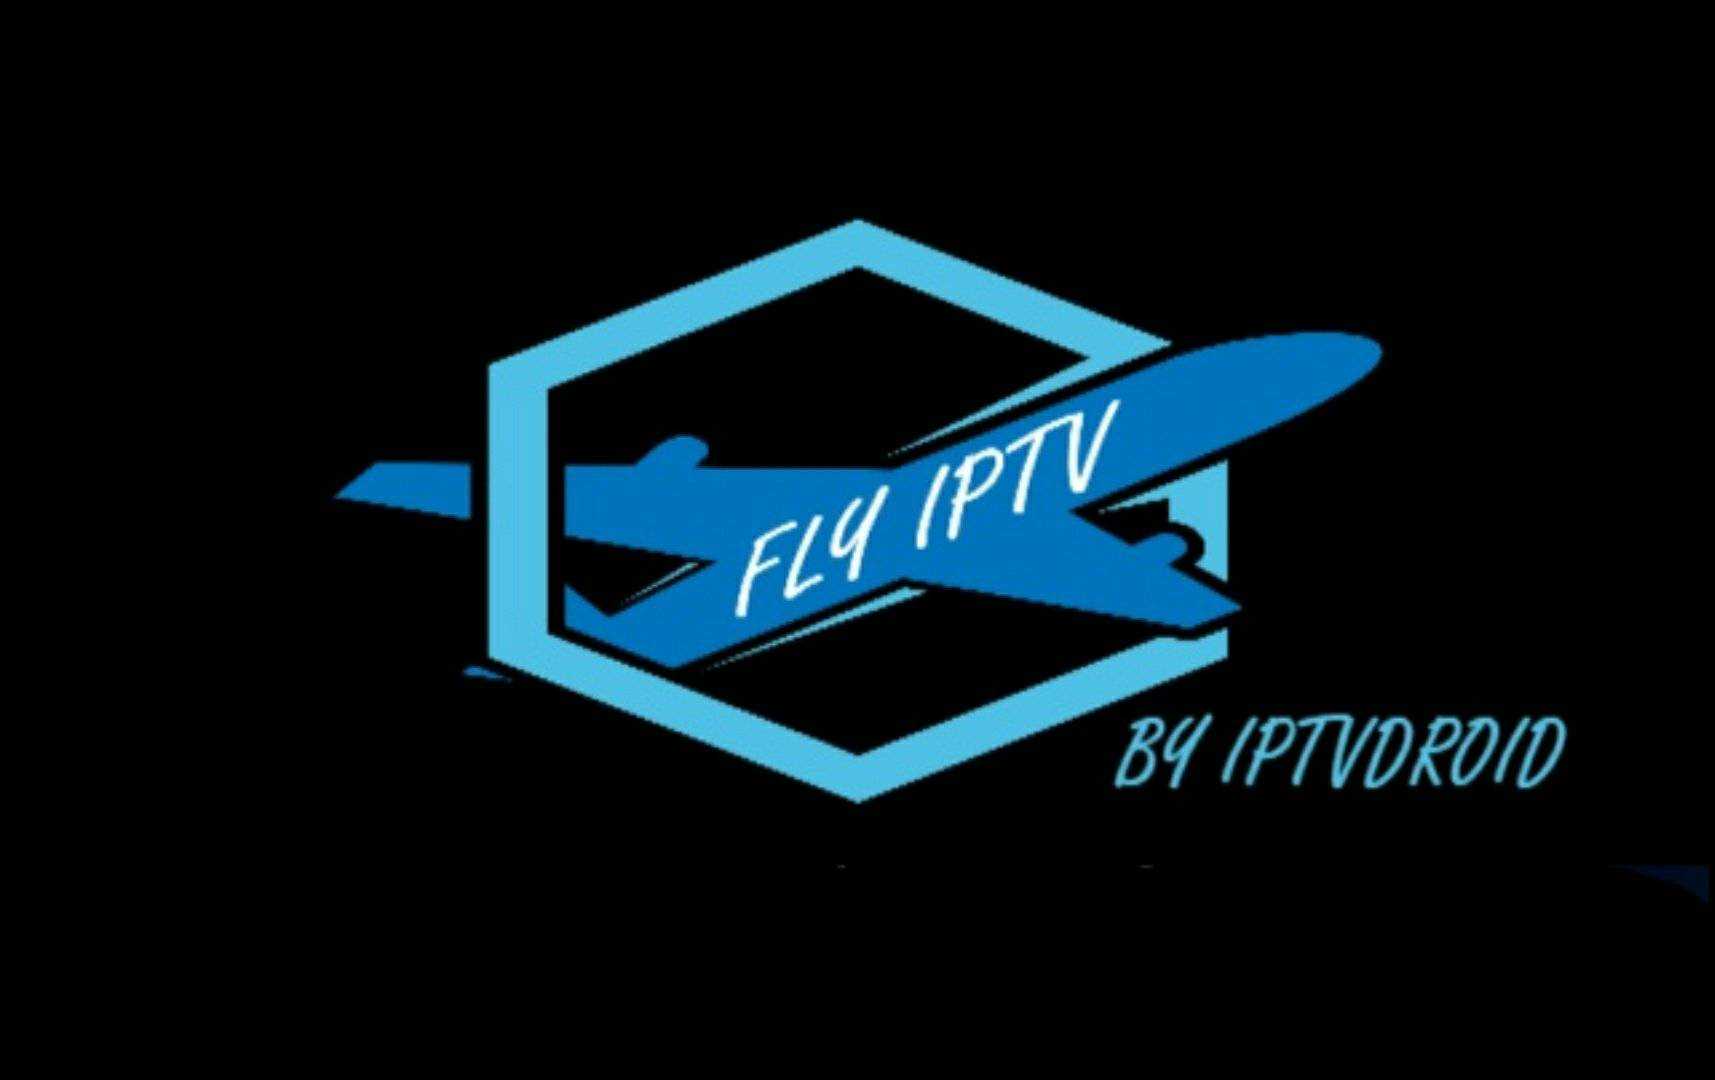 fly-iptv-by-aba.jpg